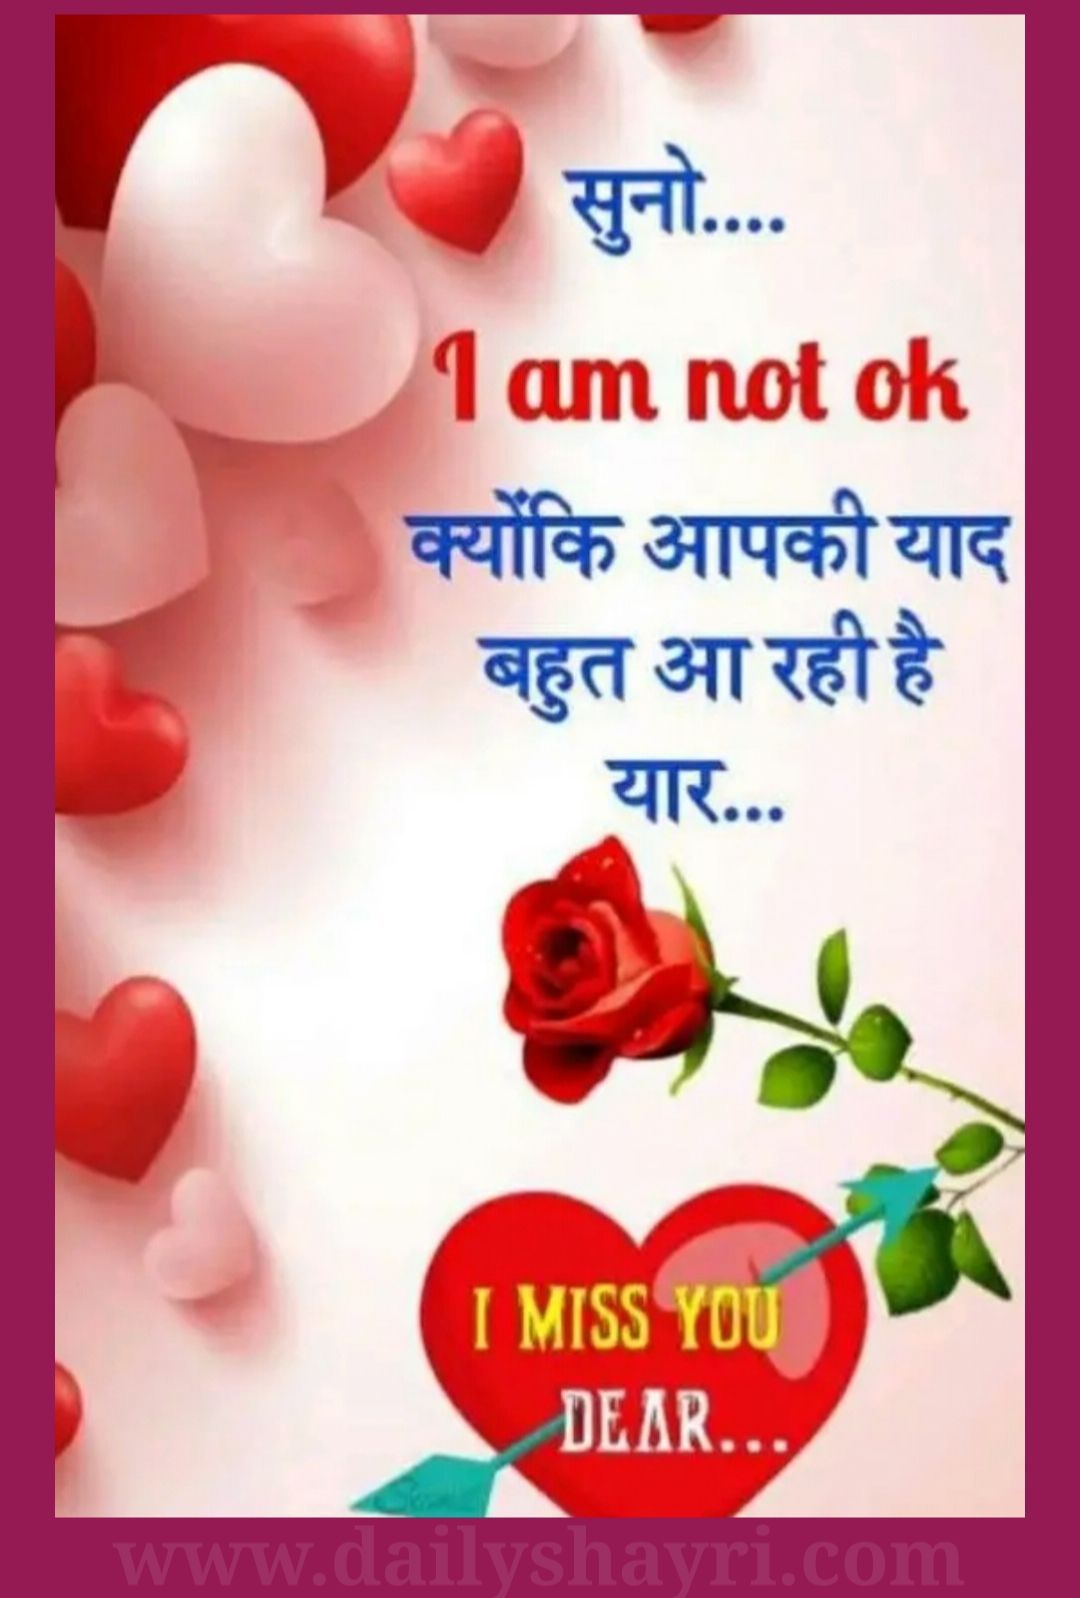 Latest Good Morning Shayari Images – Hindi Shayari Love Shayari Love Quotes Hd Images